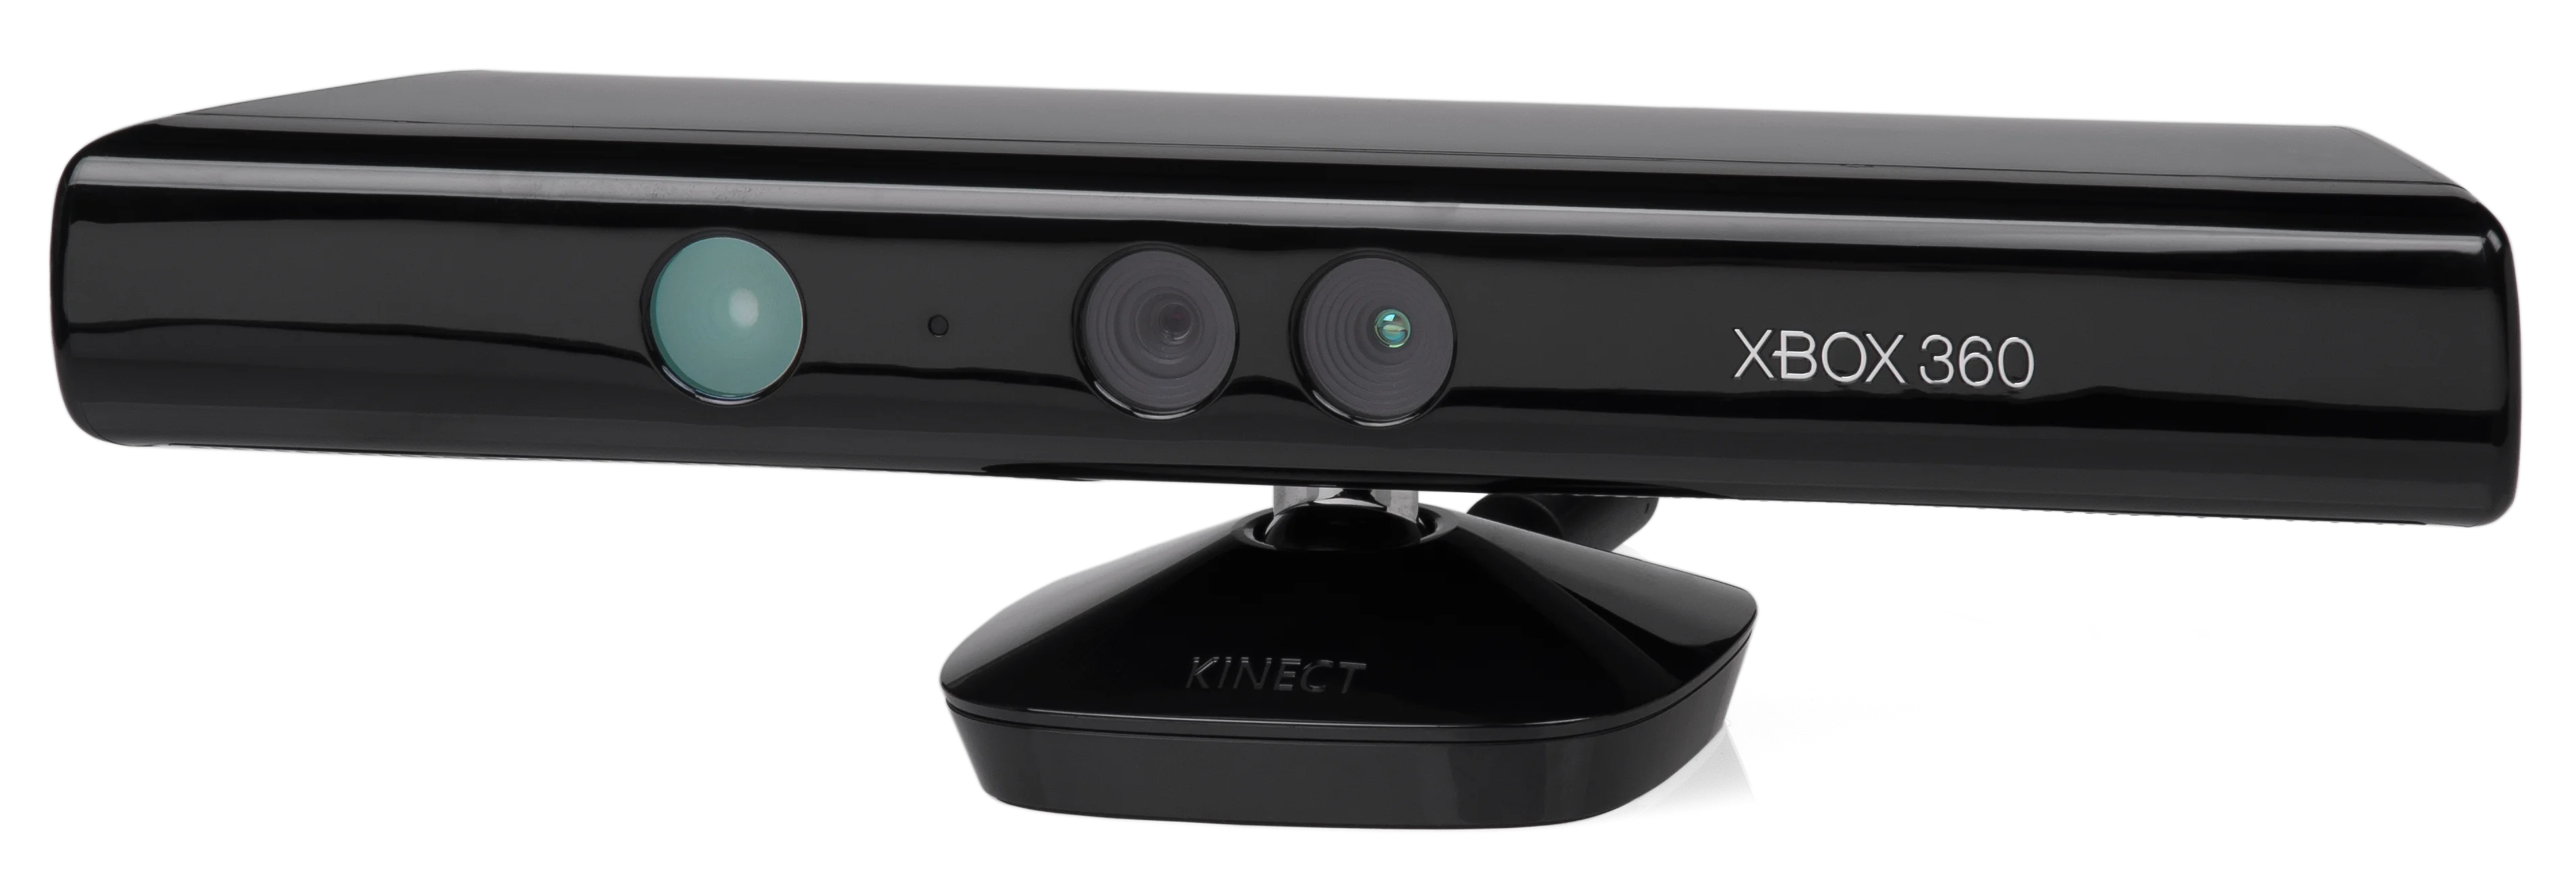 Xbox 360 Kinect. Кинект для Xbox 360. Кинект камера для Xbox 360. Приставка Xbox 360 с Kinect. Xbox kinect купить